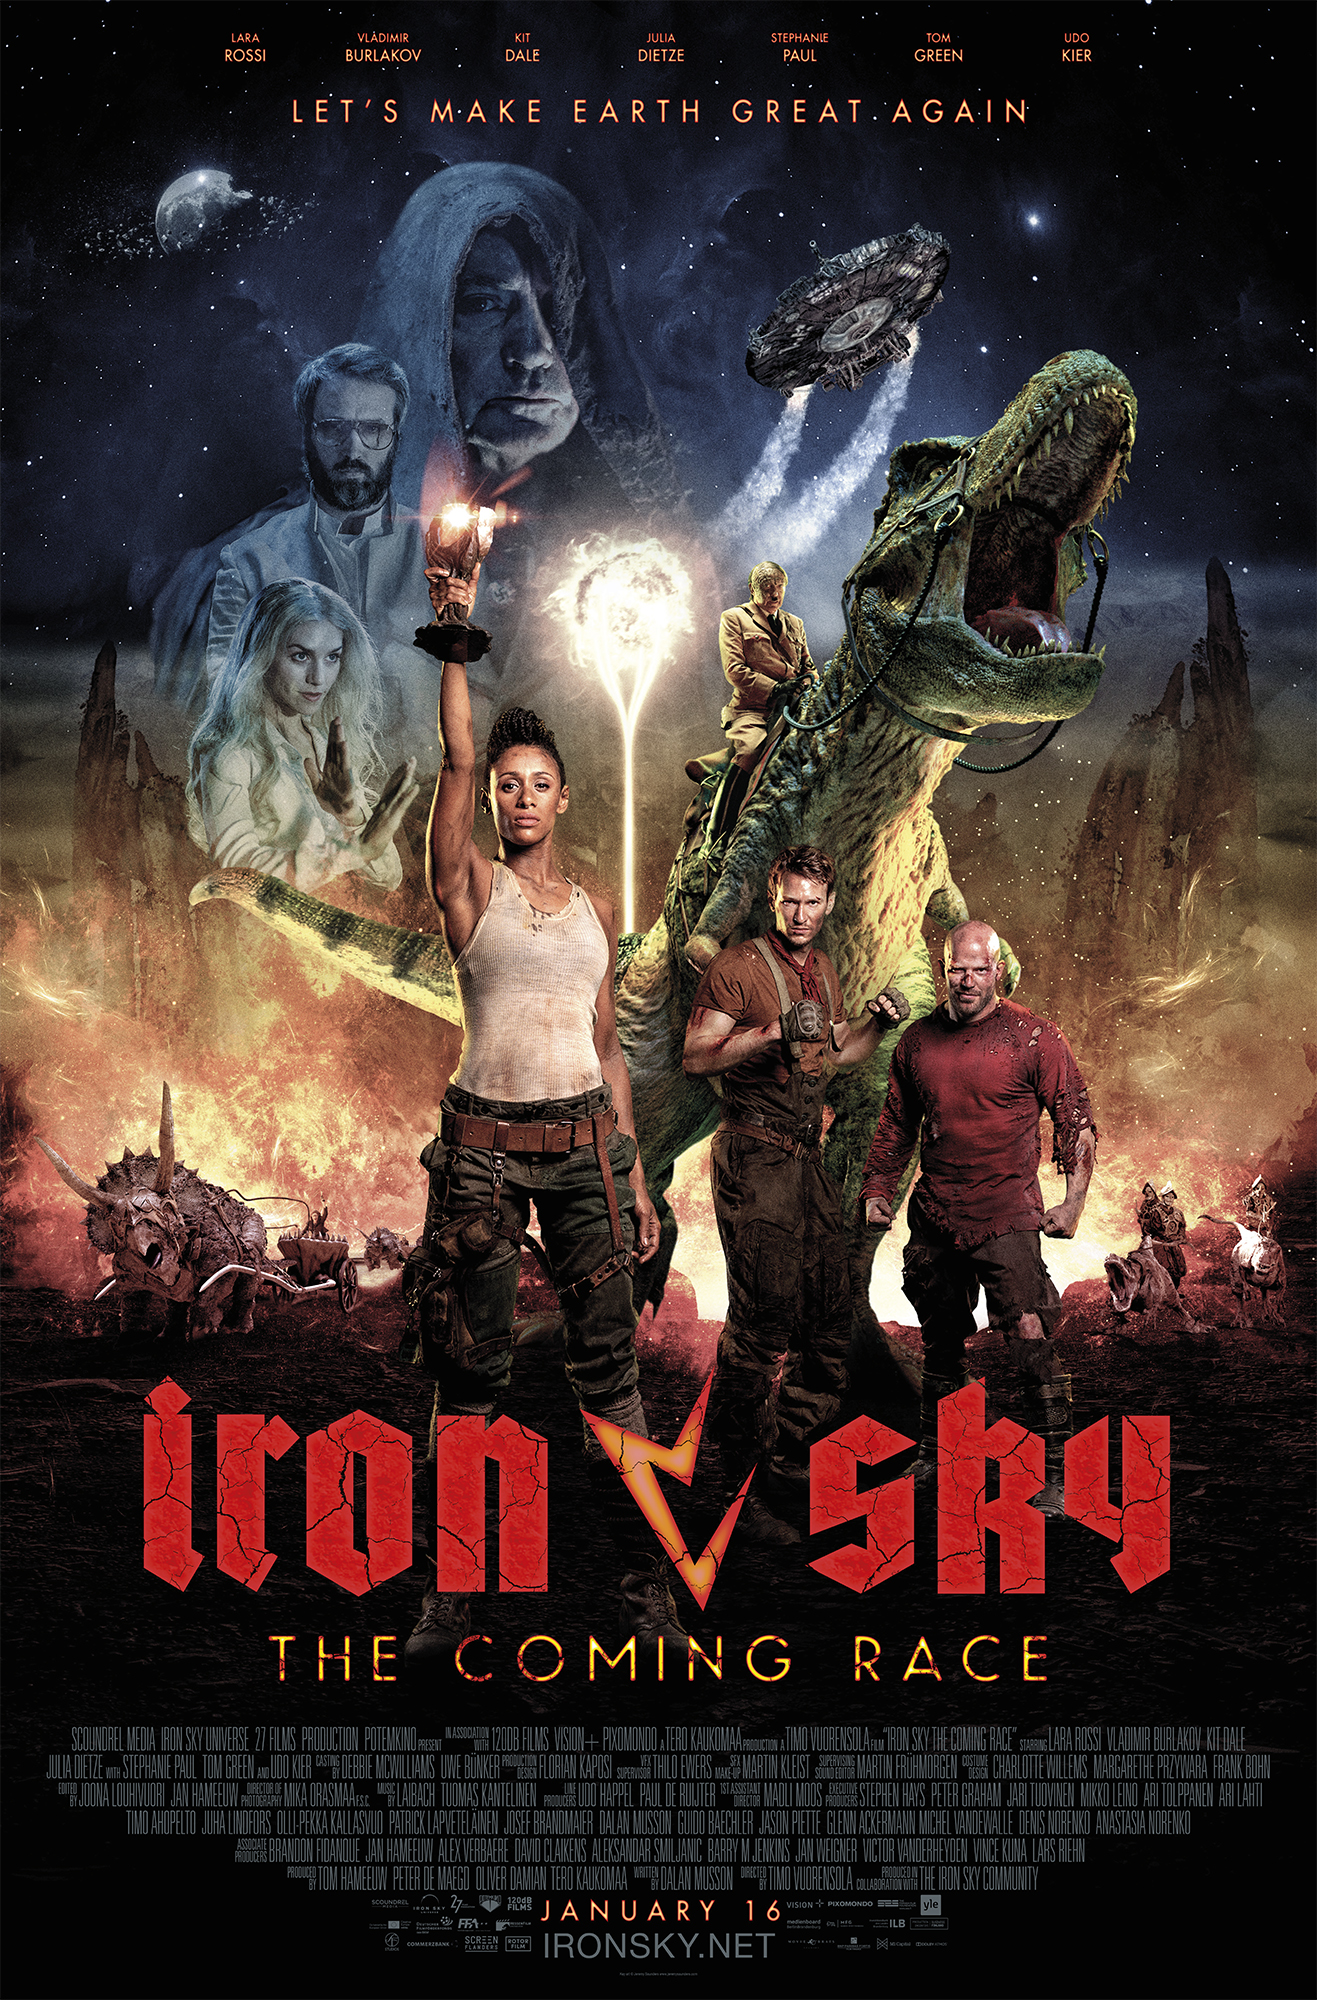 Stiahni si Filmy bez titulků     Iron Sky: The Coming Race (2019)[1080p] = CSFD 52%